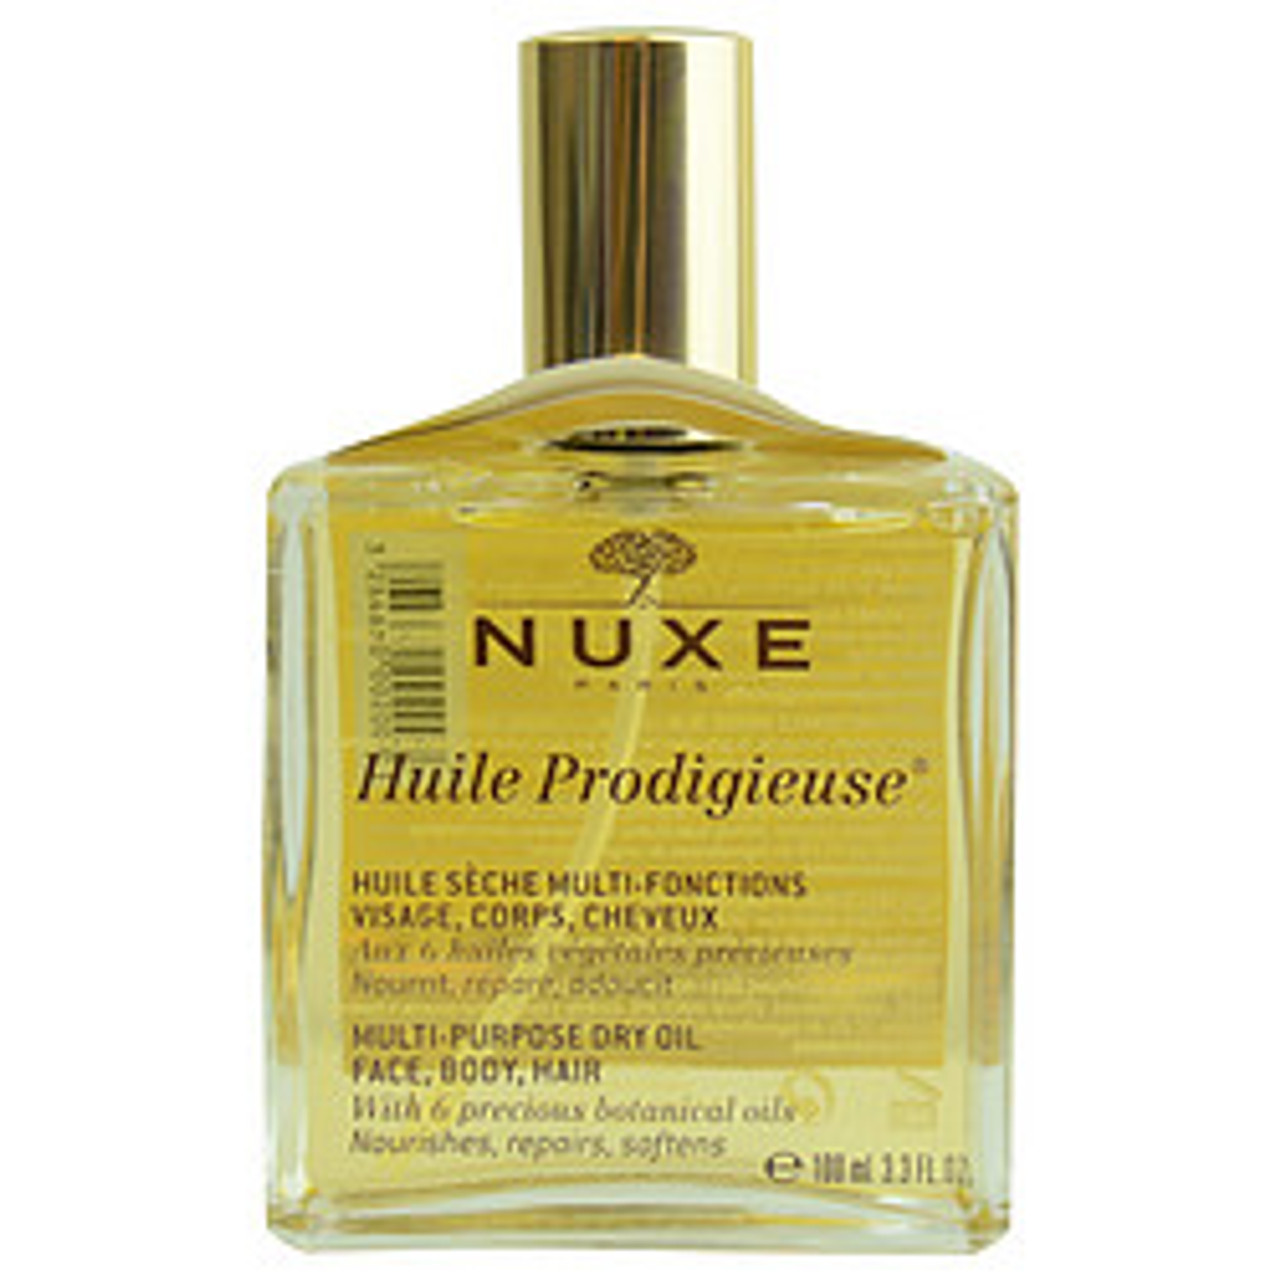 Nuxe Huile Prodigieuse Multi Usage Dry Oil - 3.3 oz (100ml)